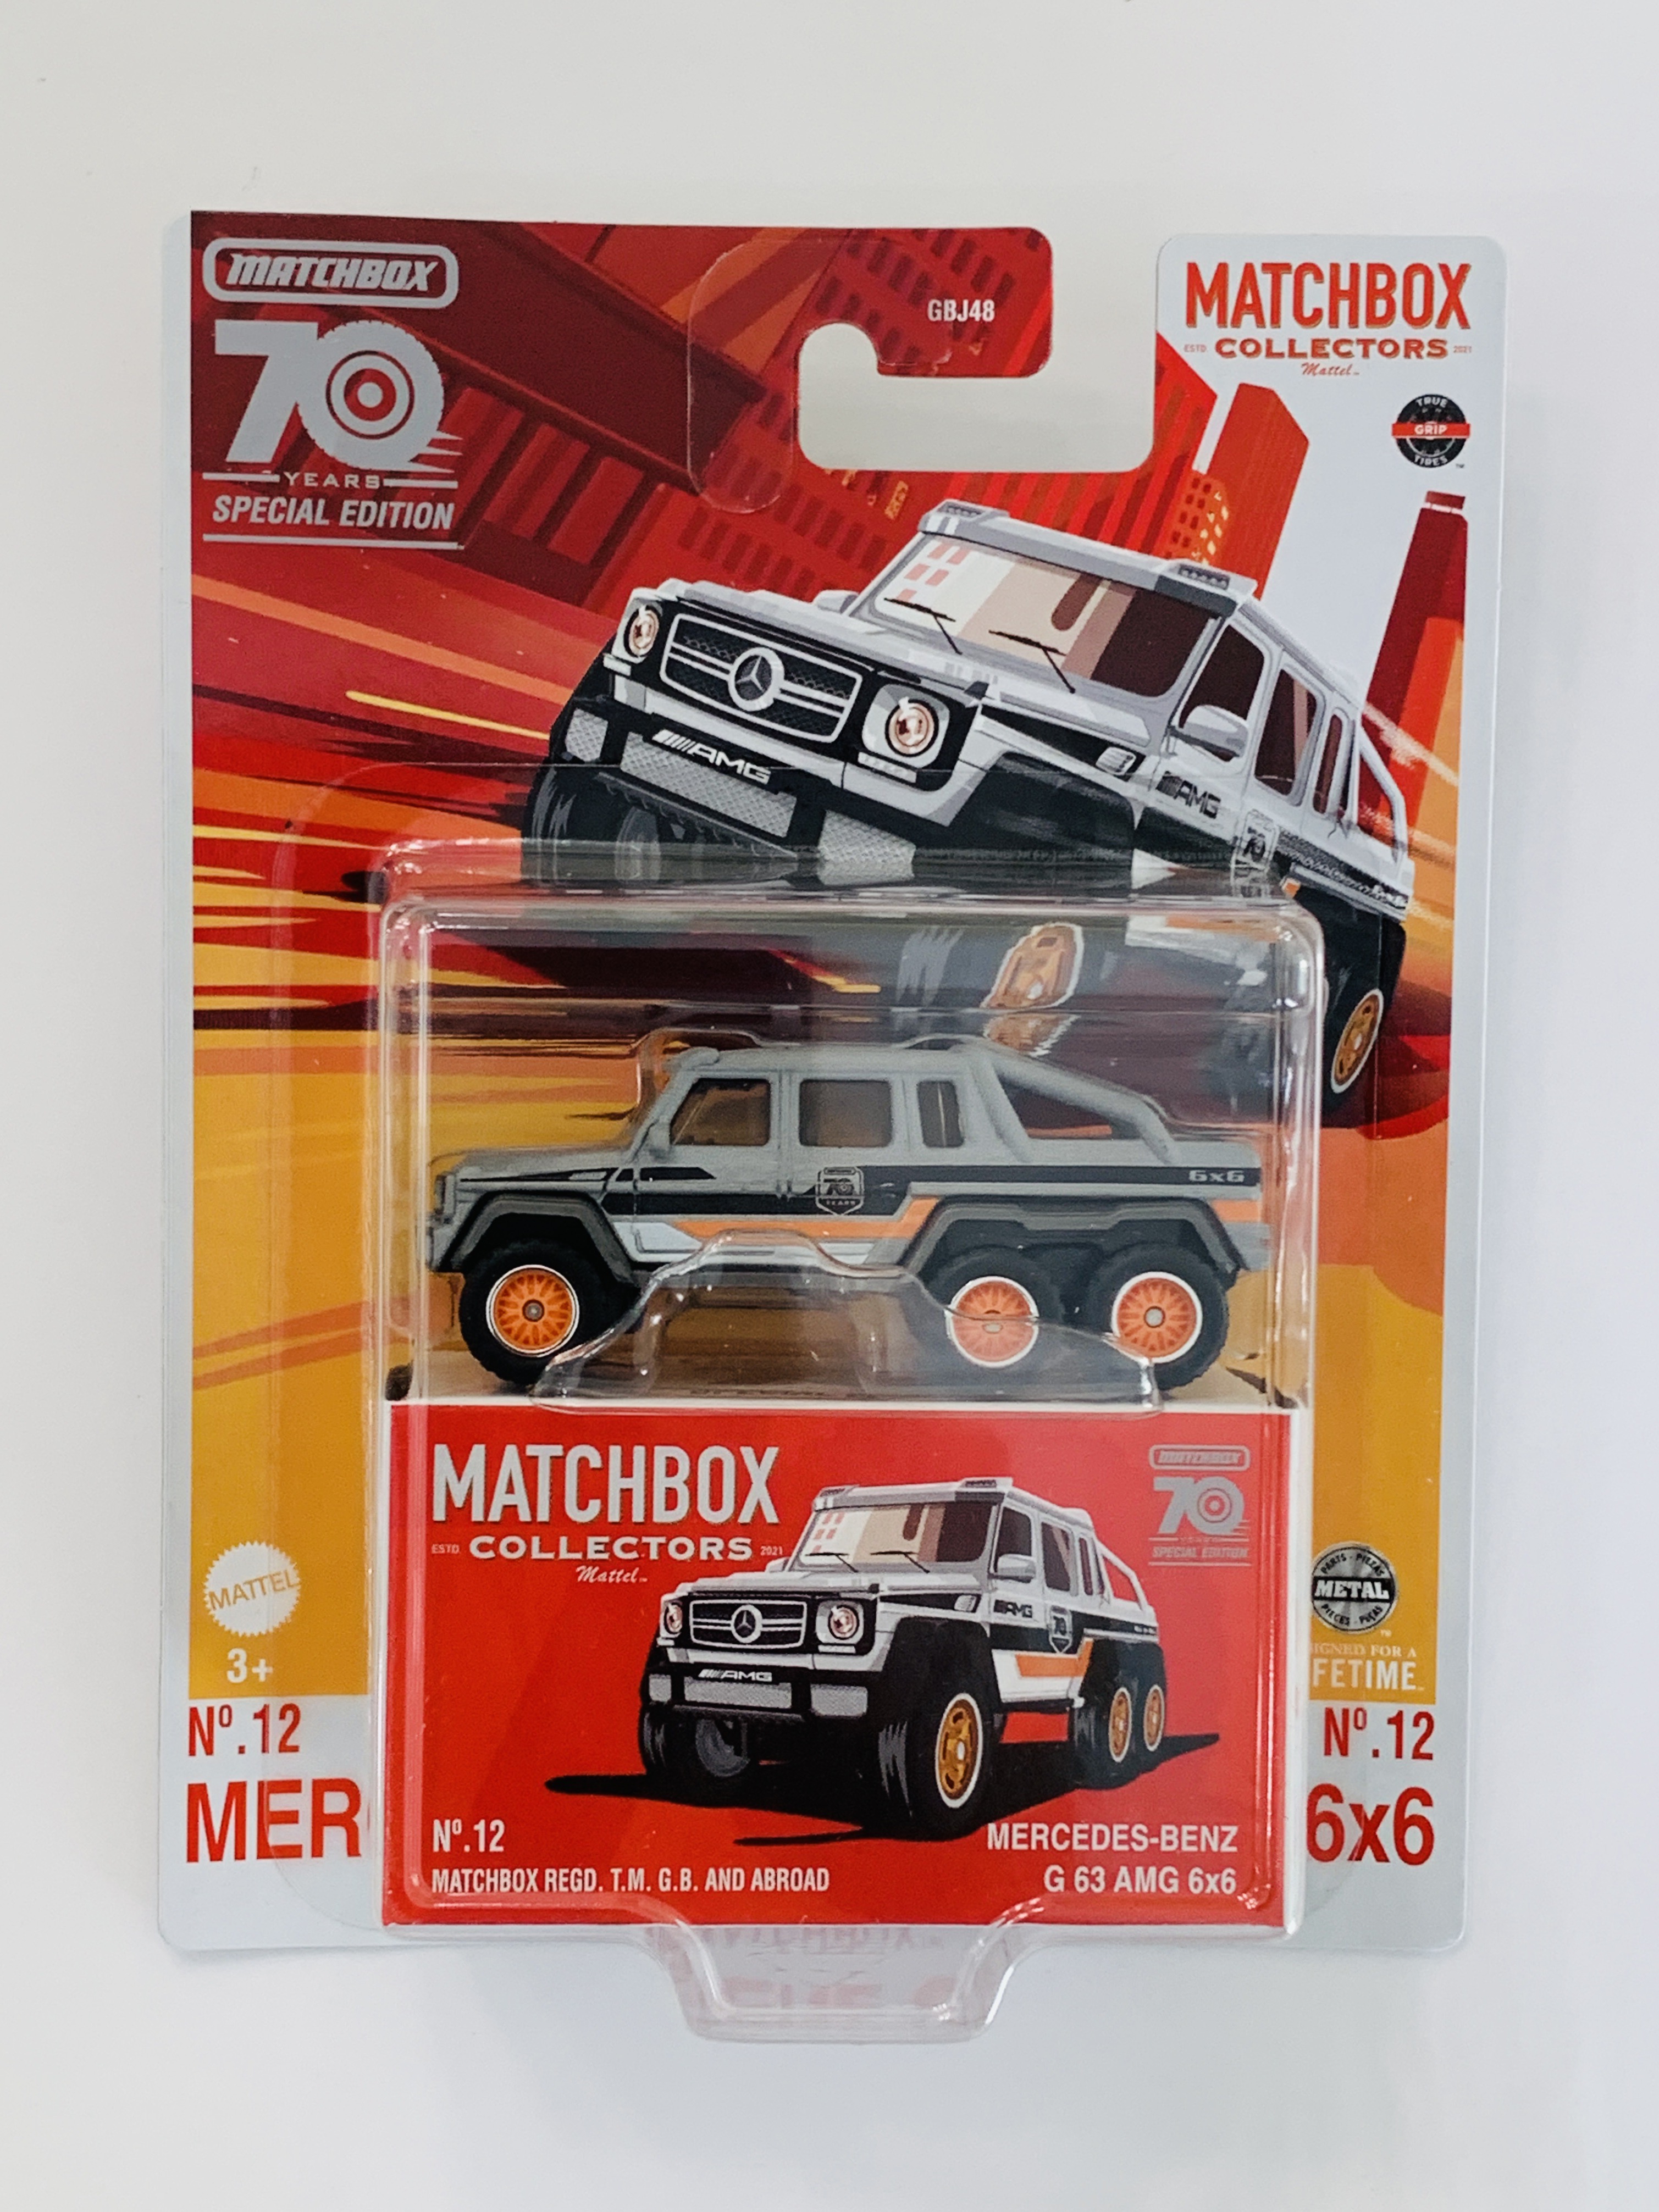 Matchbox Collectors Mercedes-Benz G 63 AMG 6x6